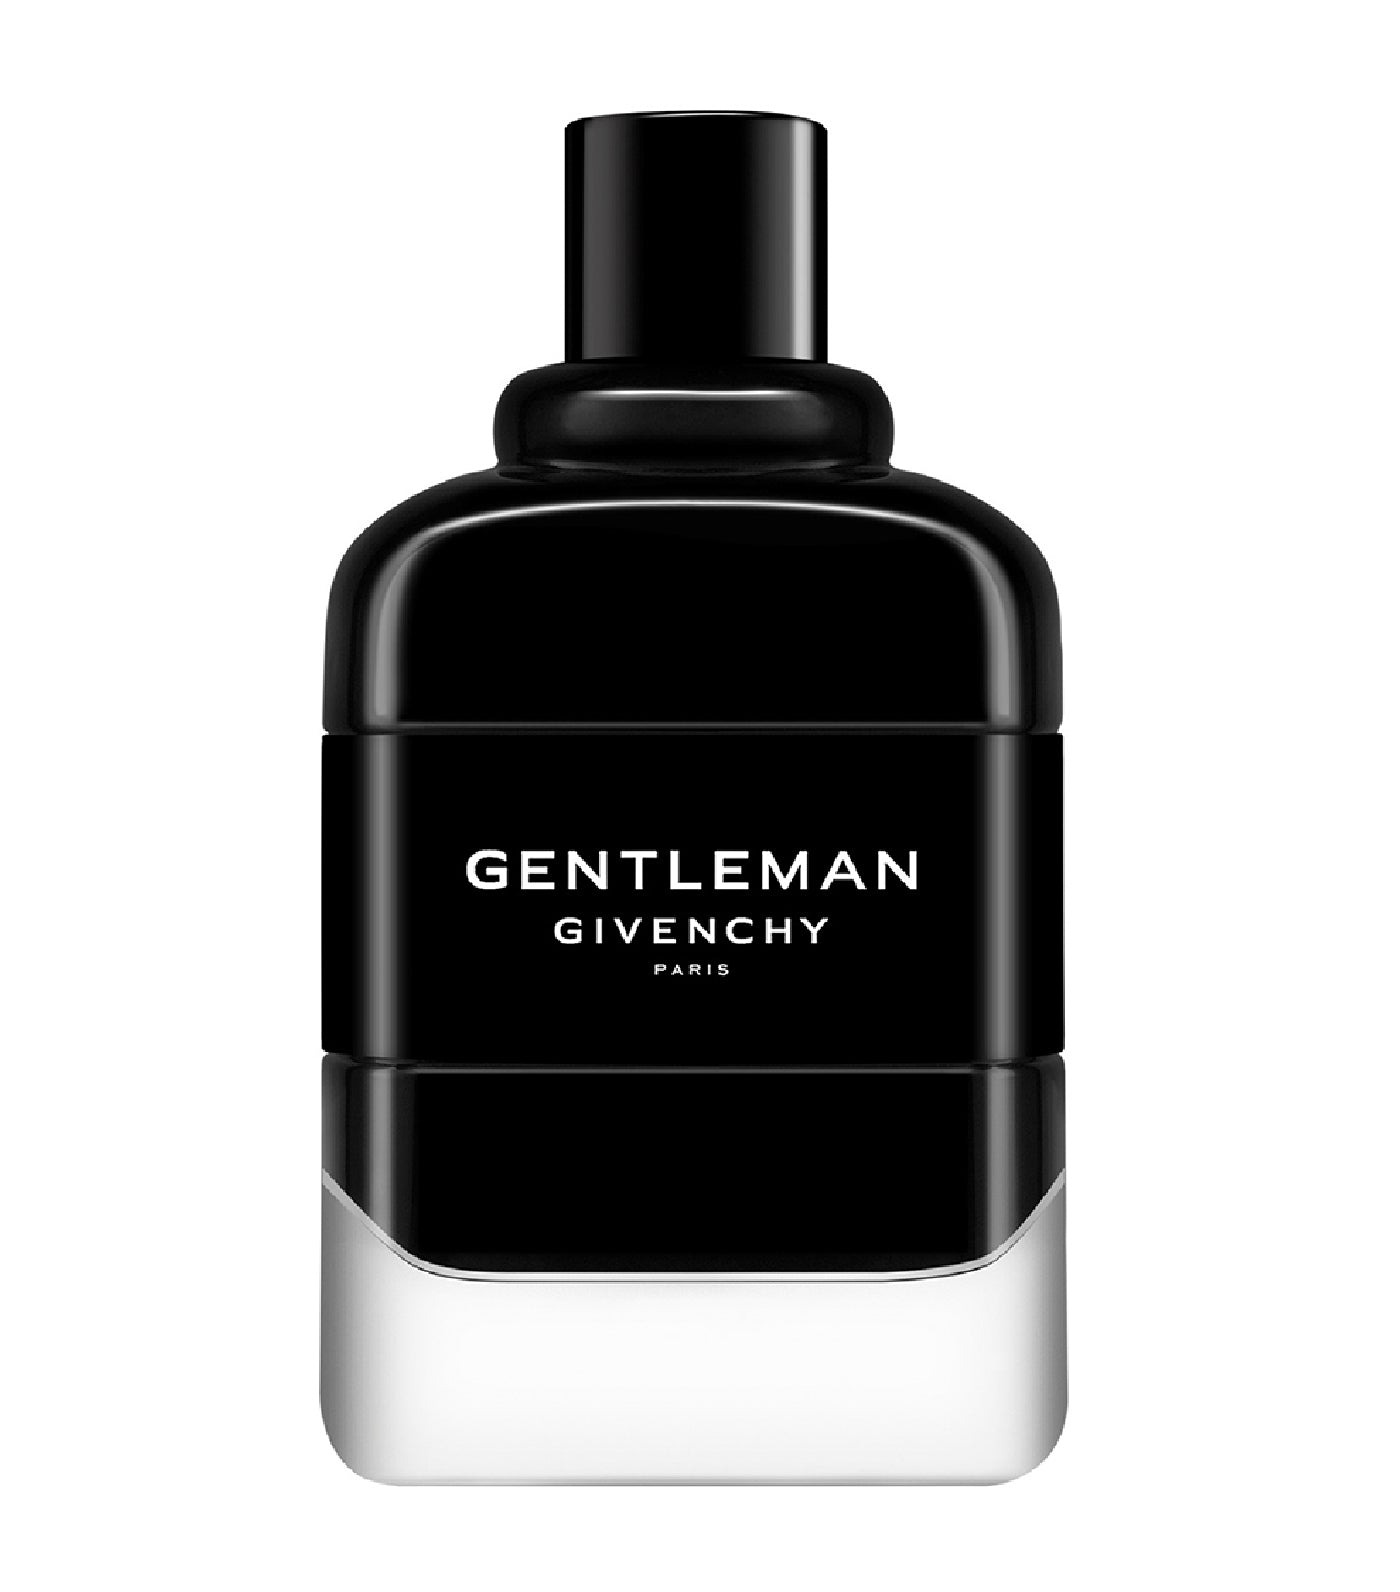 Givenchy for Gentleman Givenchy Eau De Parfum 50ml